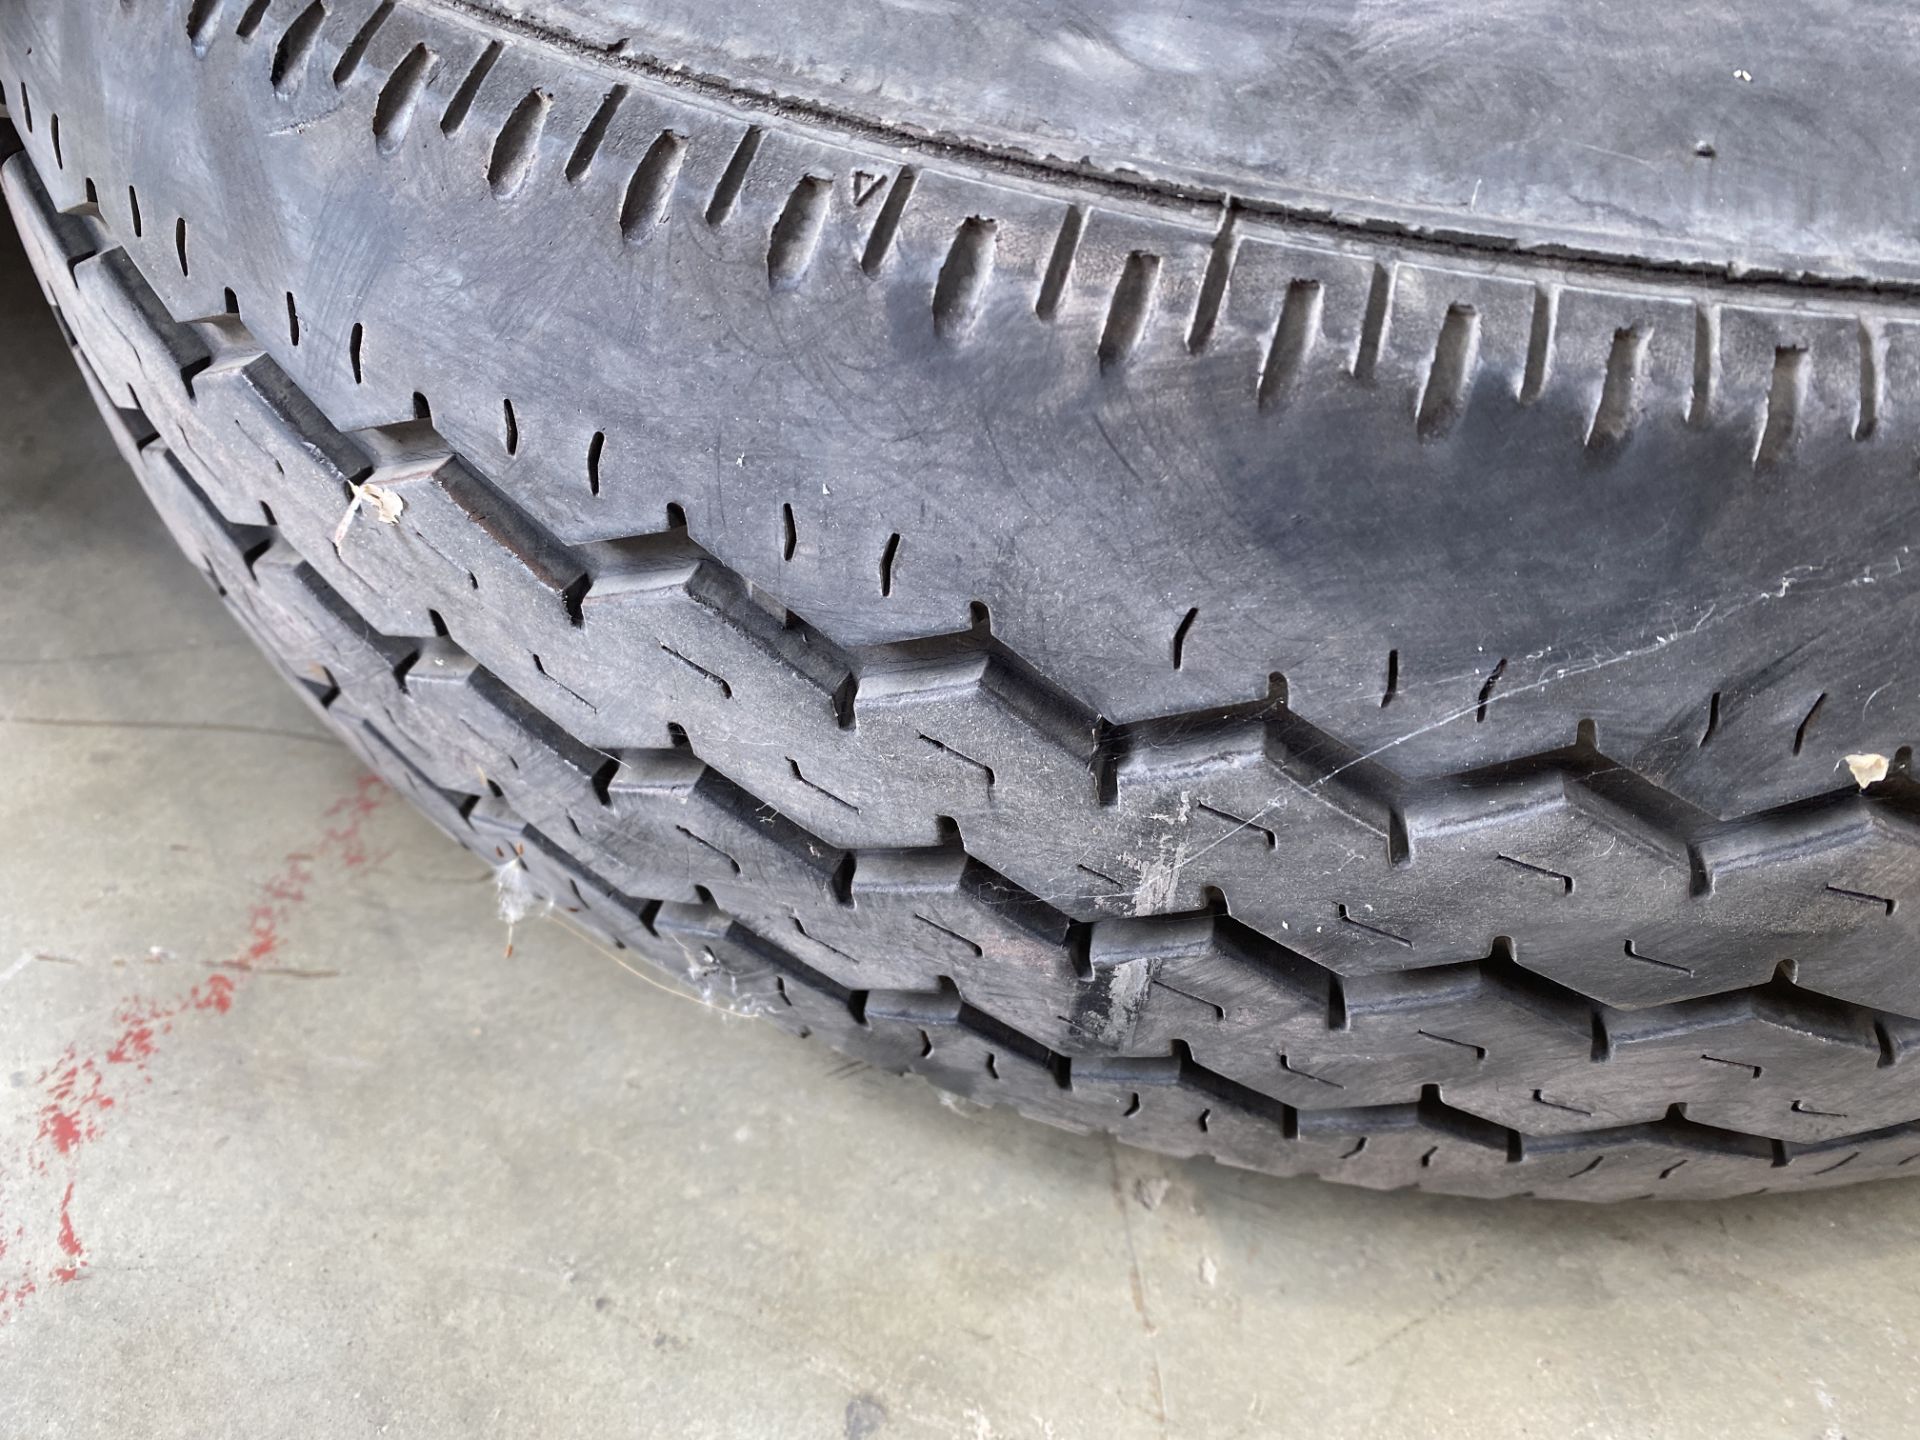 Mohawk 195/R14/C Steel 5 stud wheels / rims & tyres - Image 5 of 5